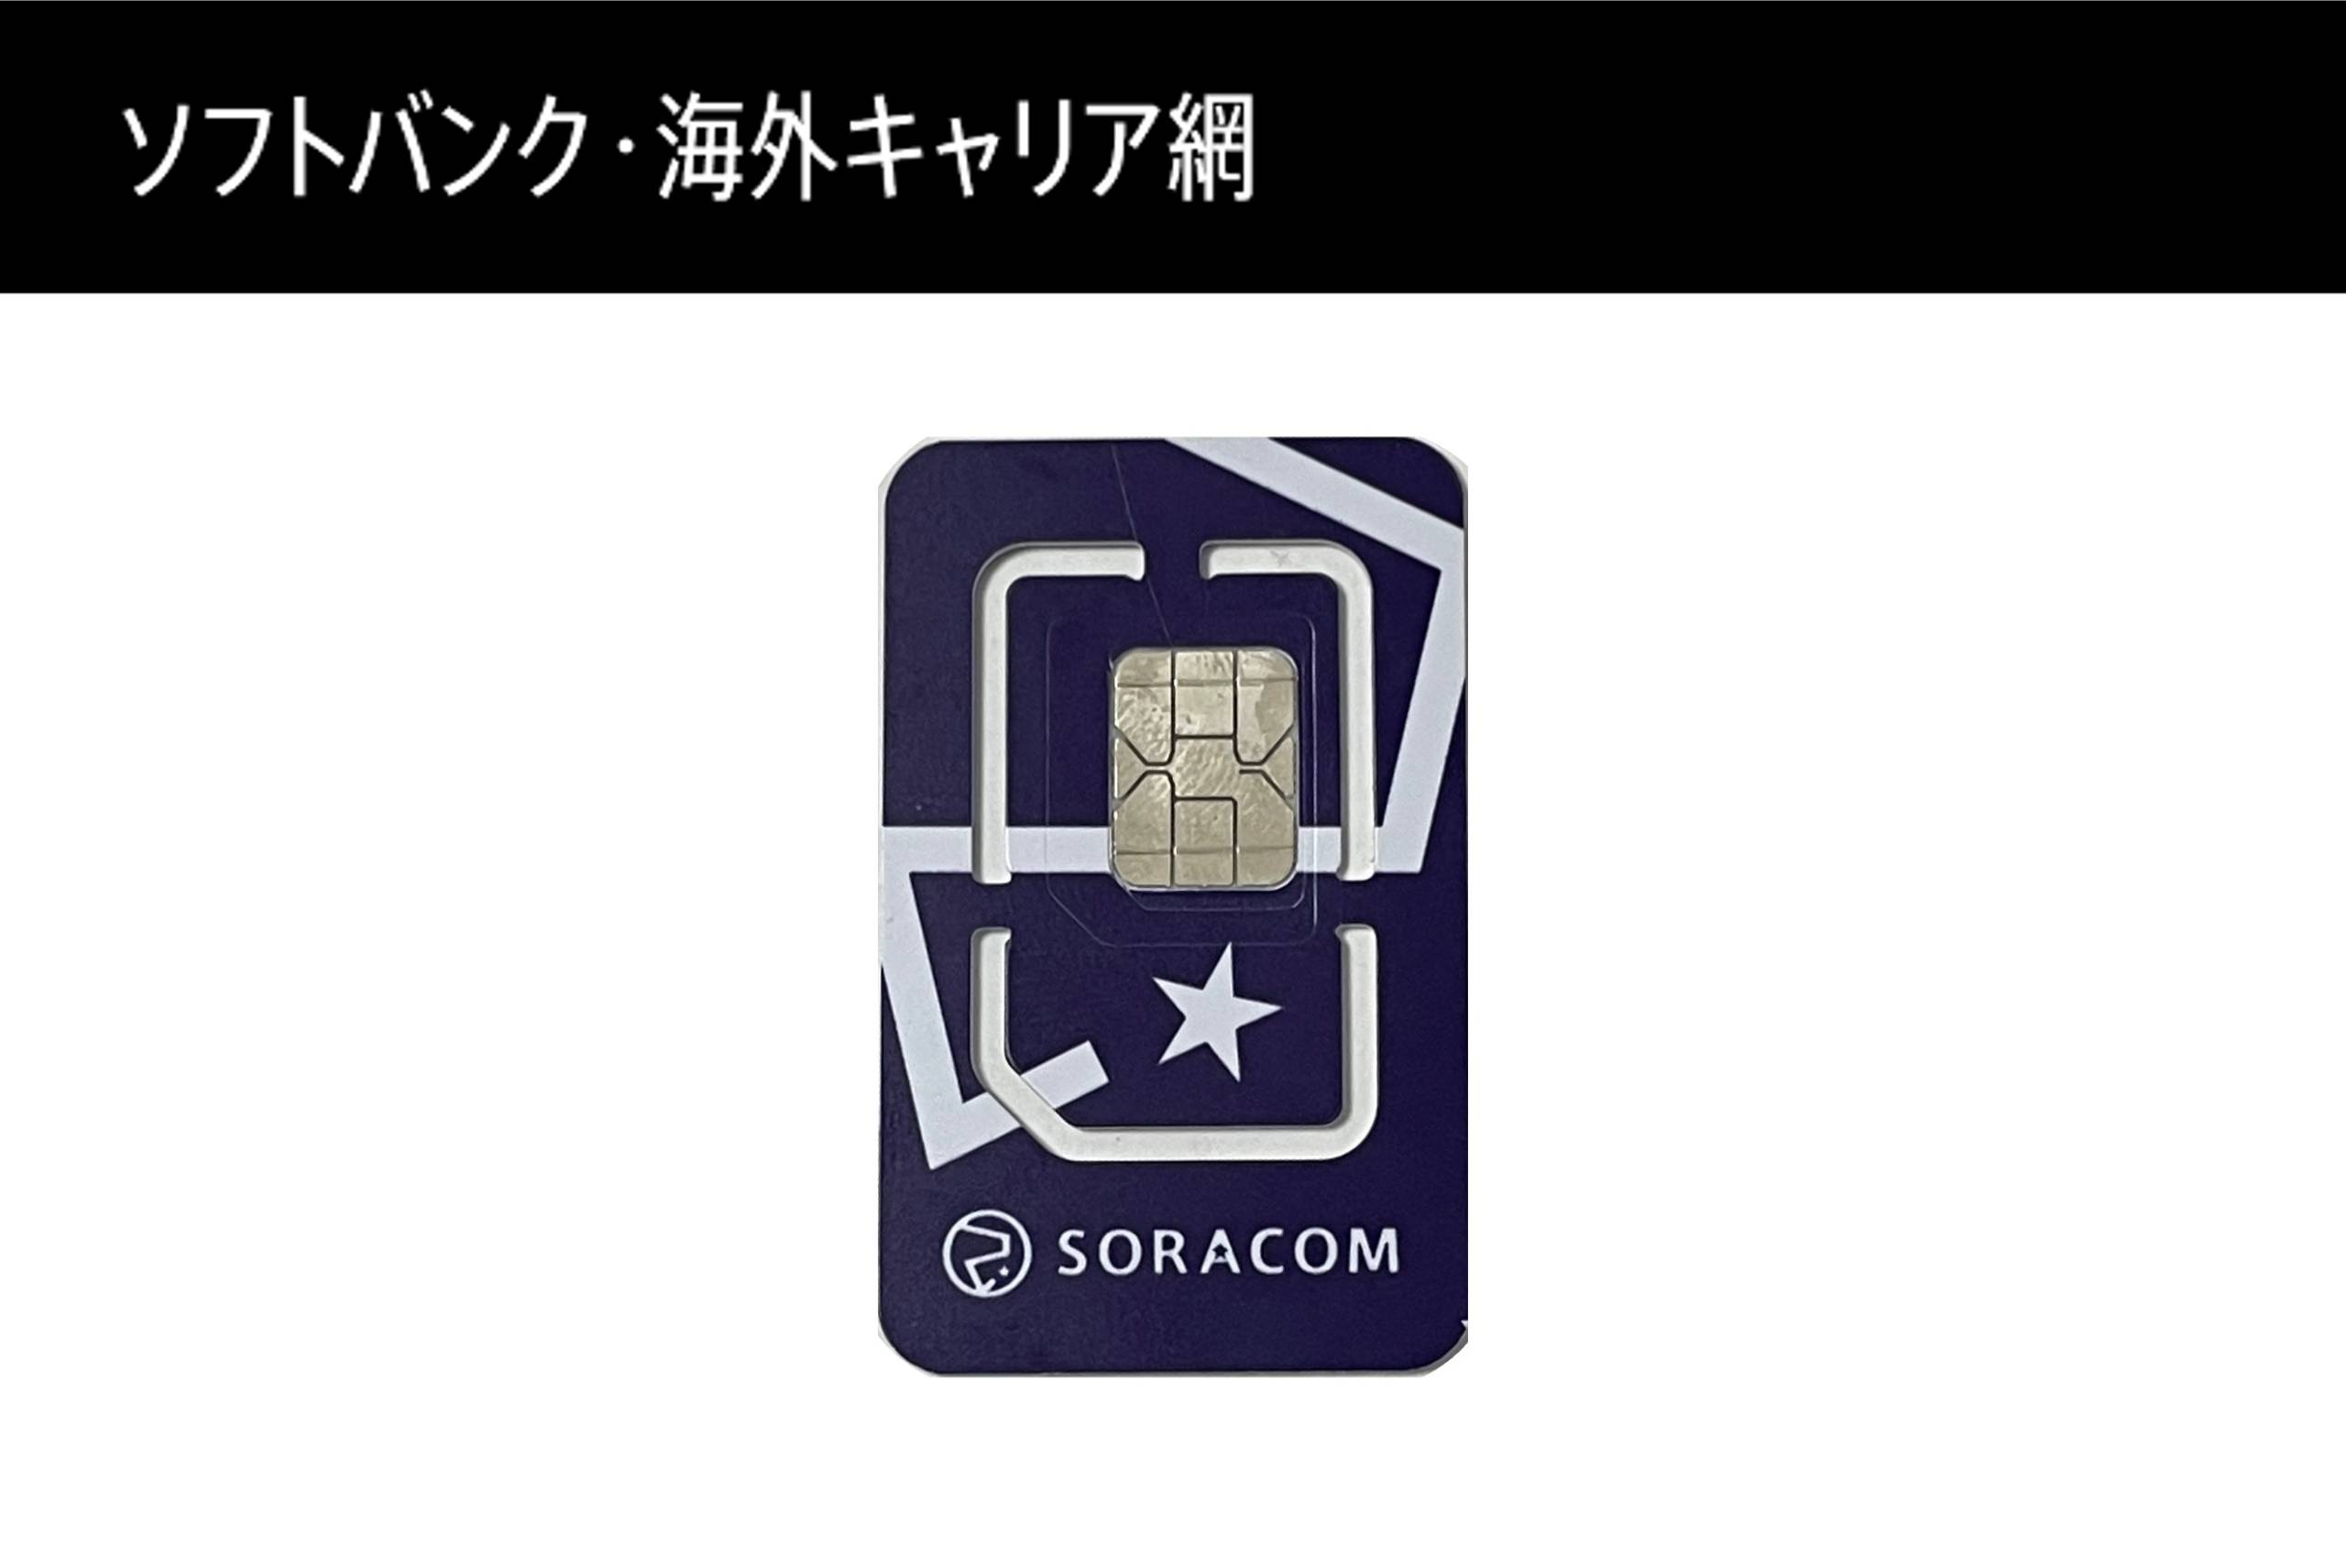 SORACOM IoT SIM (planP1)